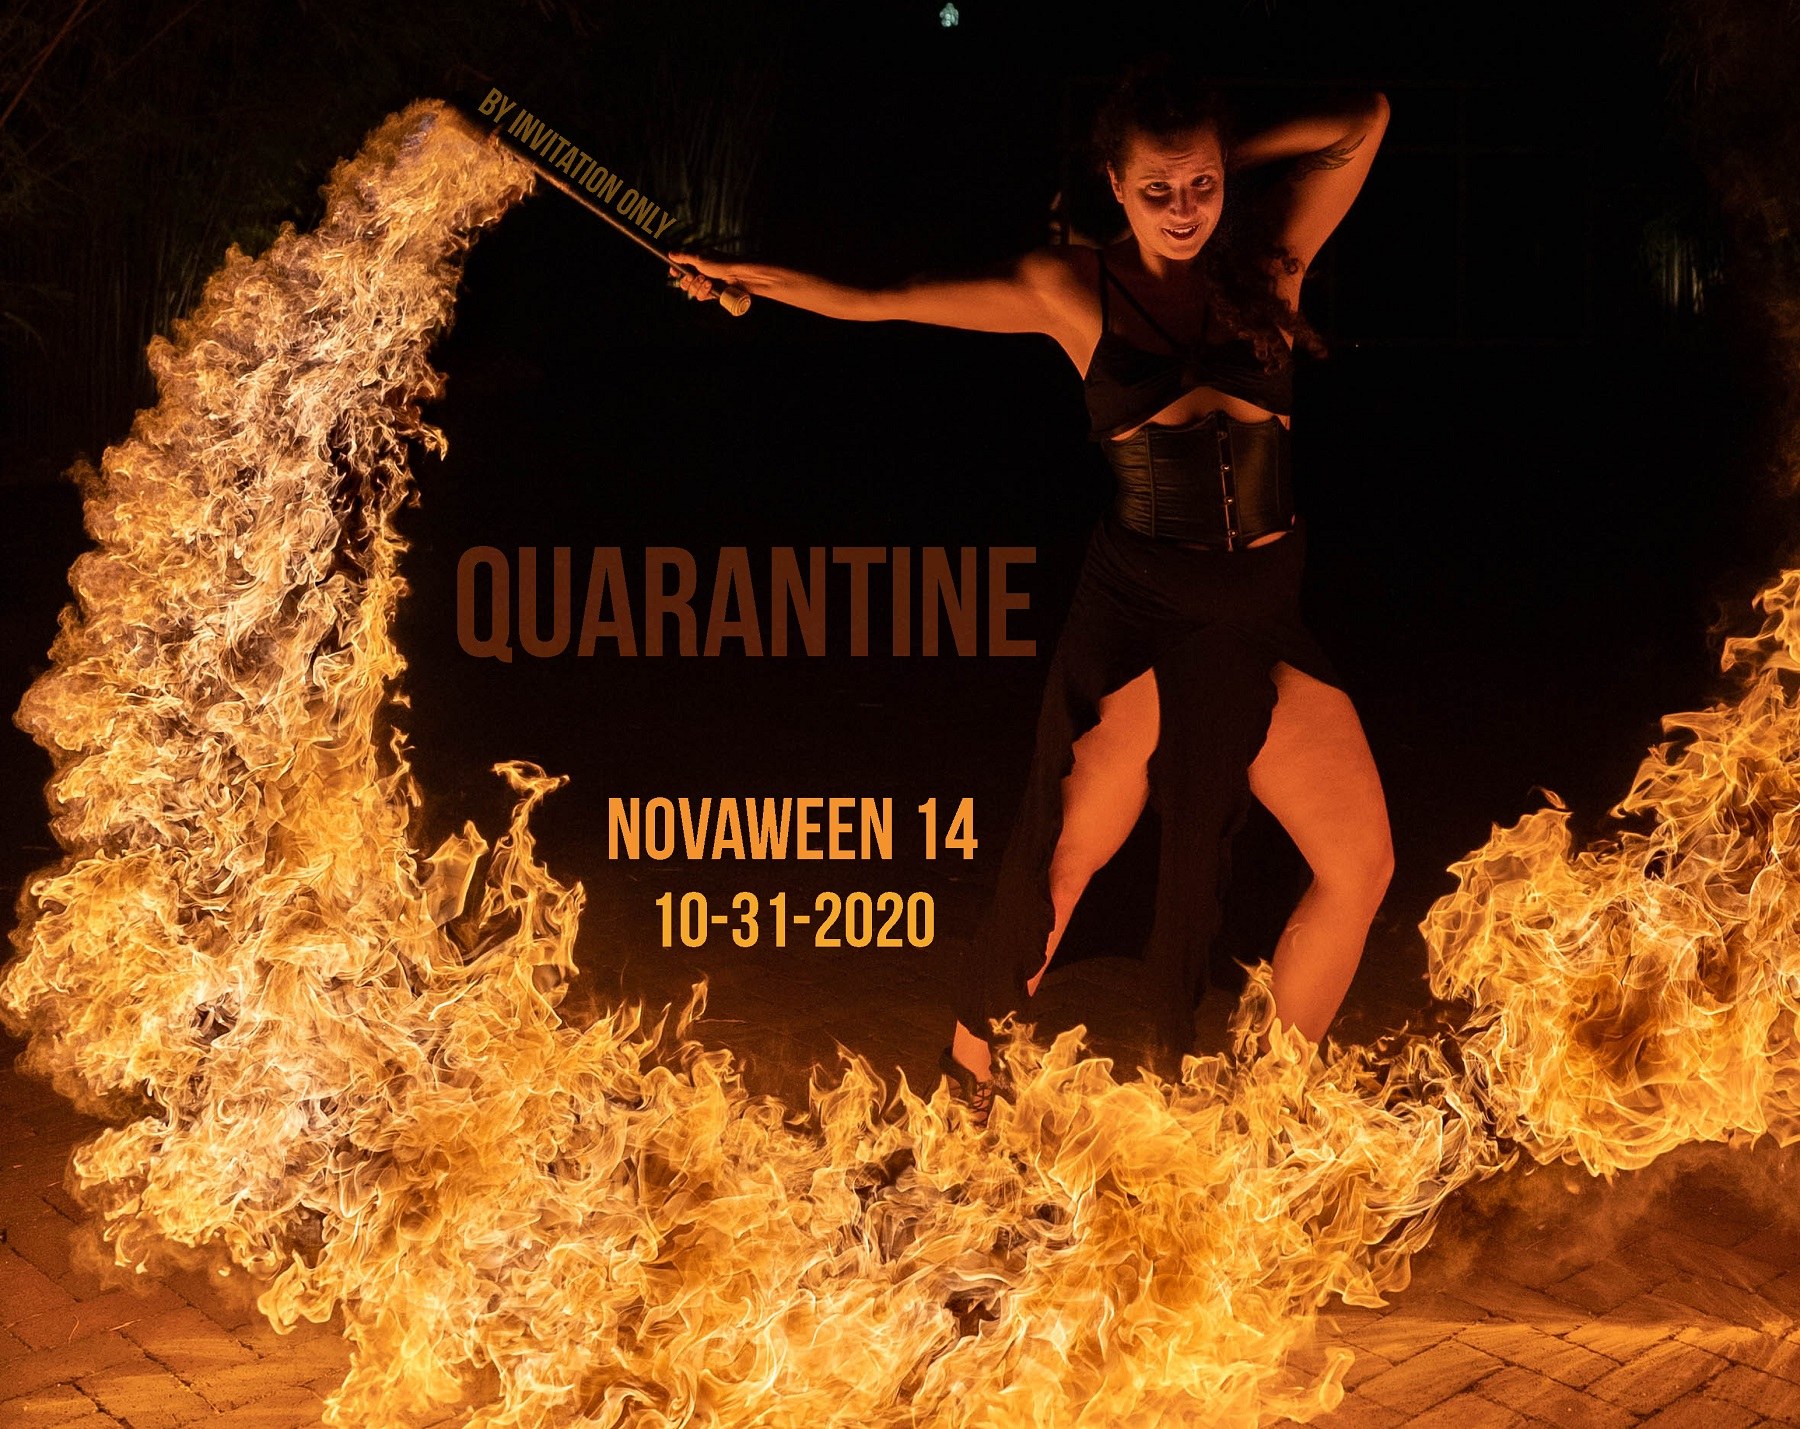 2020 10-31 Novaween 14 Quarantine a historic downtown St. Pete venue NOVA 535